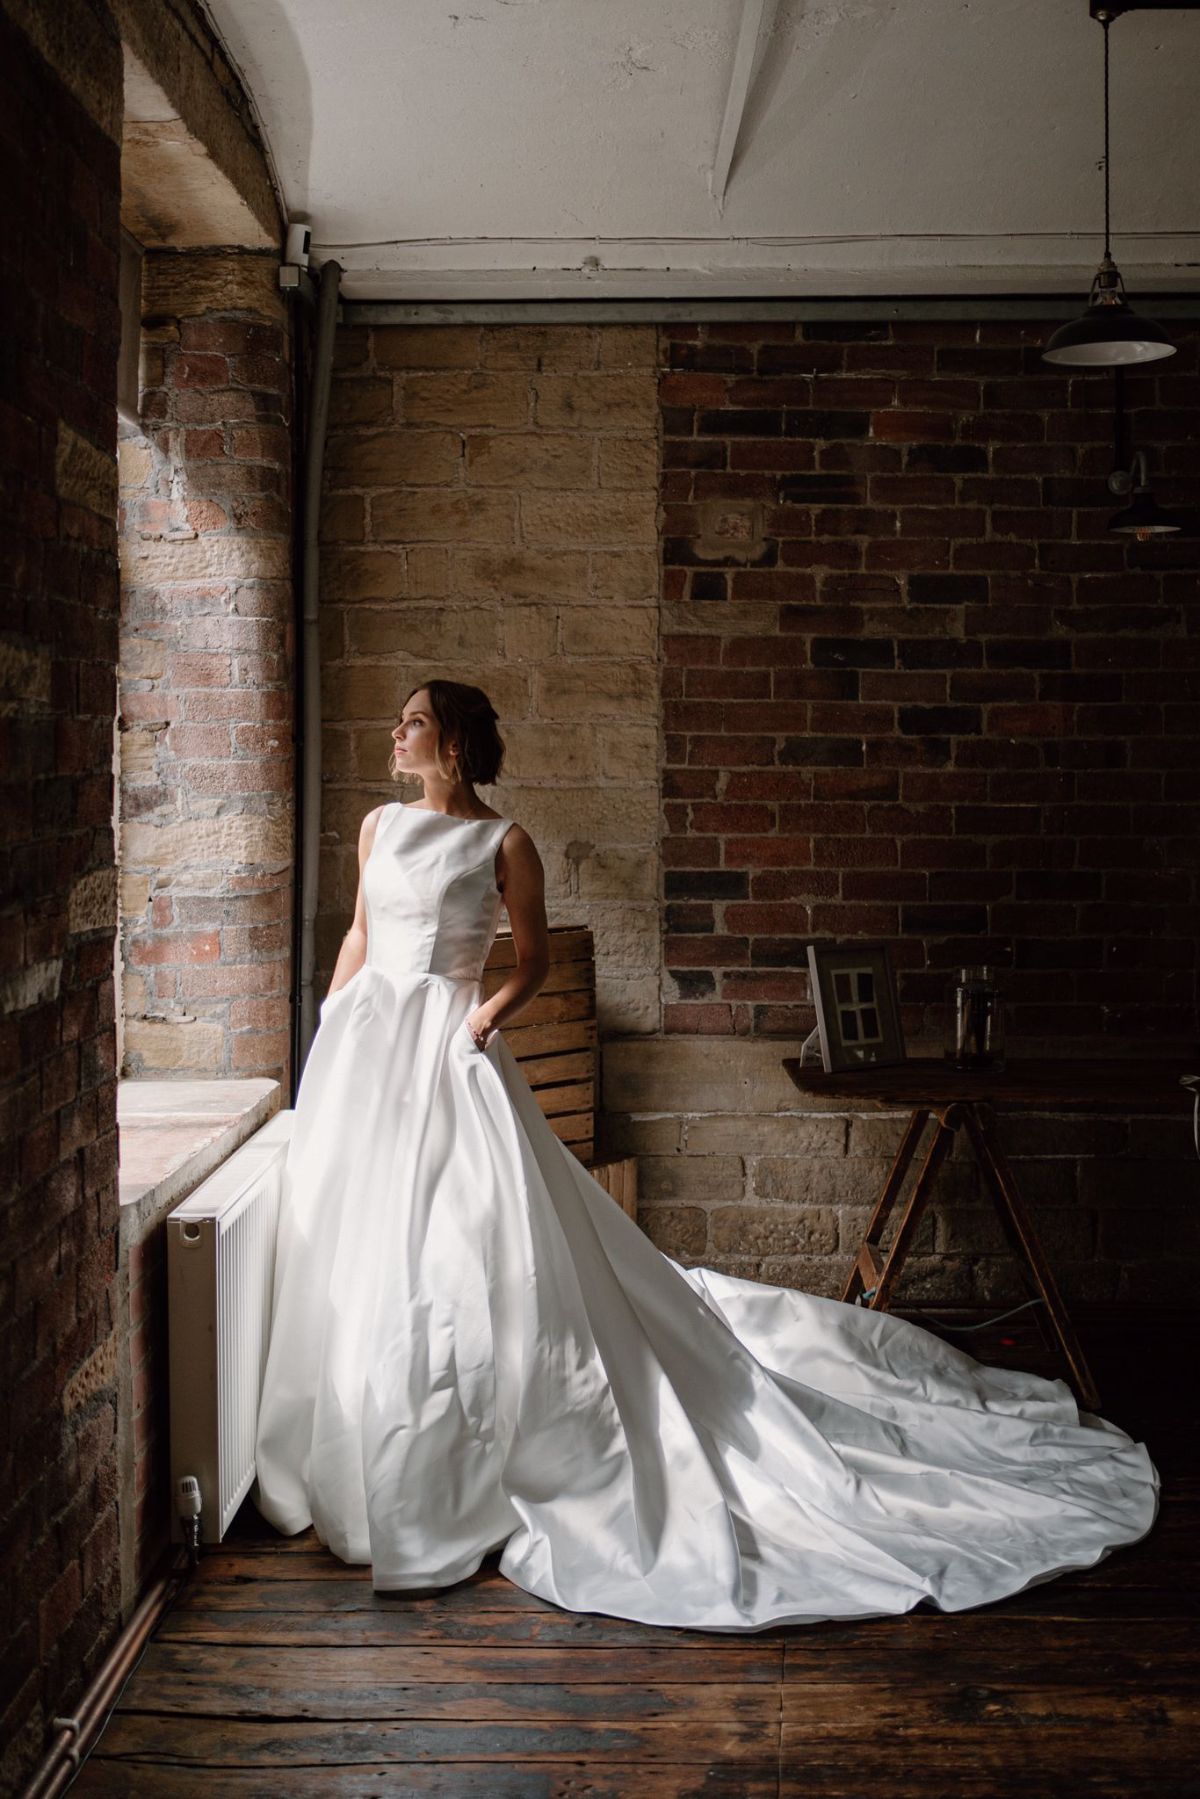 Best Dress 2 Impress Bridal-Image-50